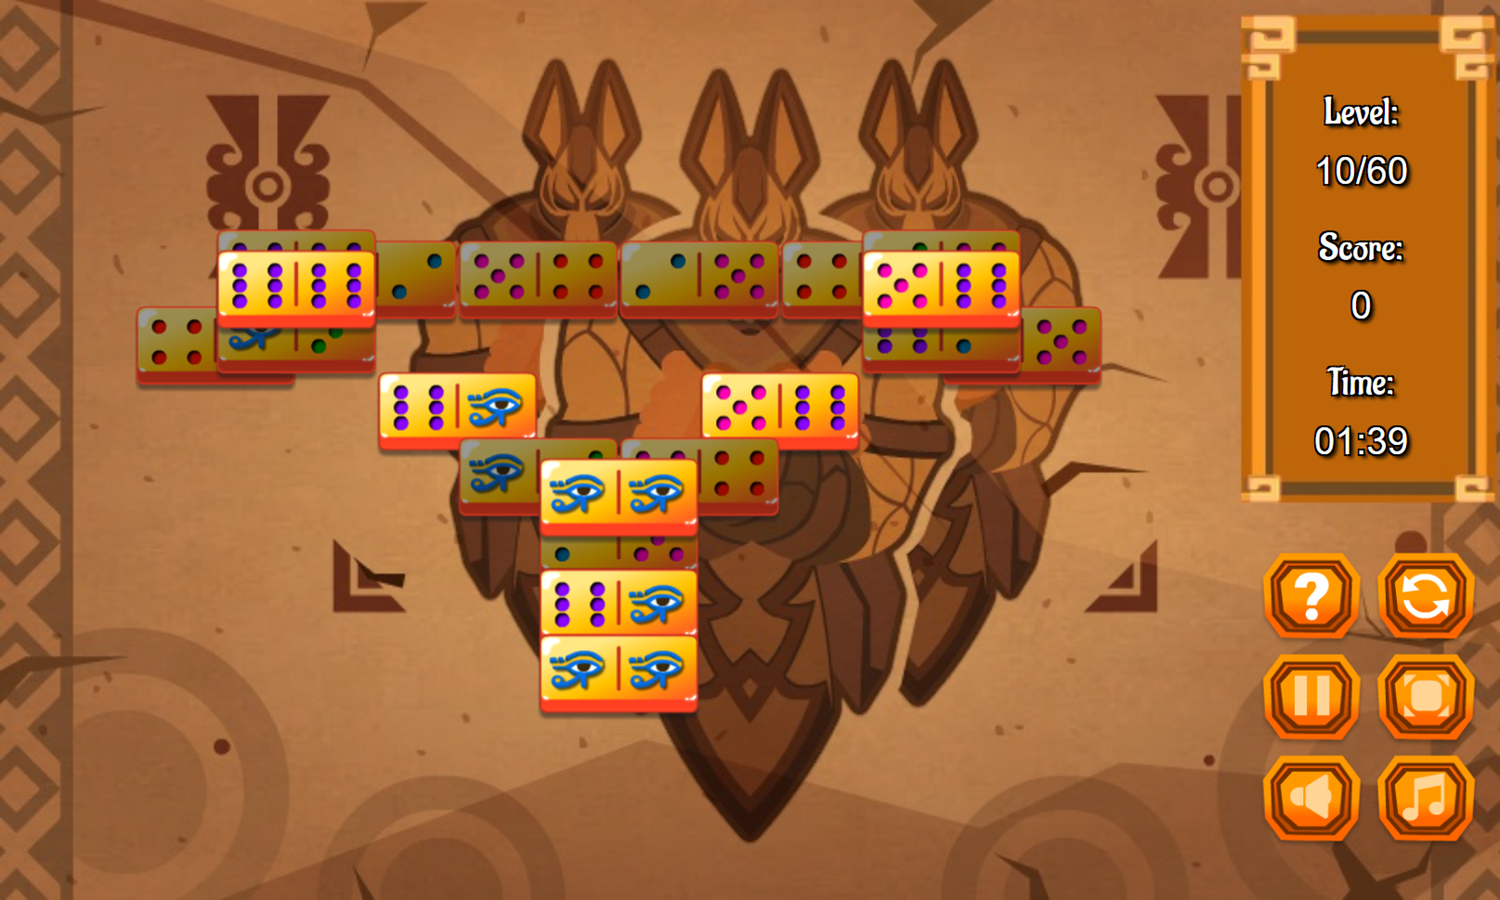 Mah-Domino Game Level Progress Screenshot.